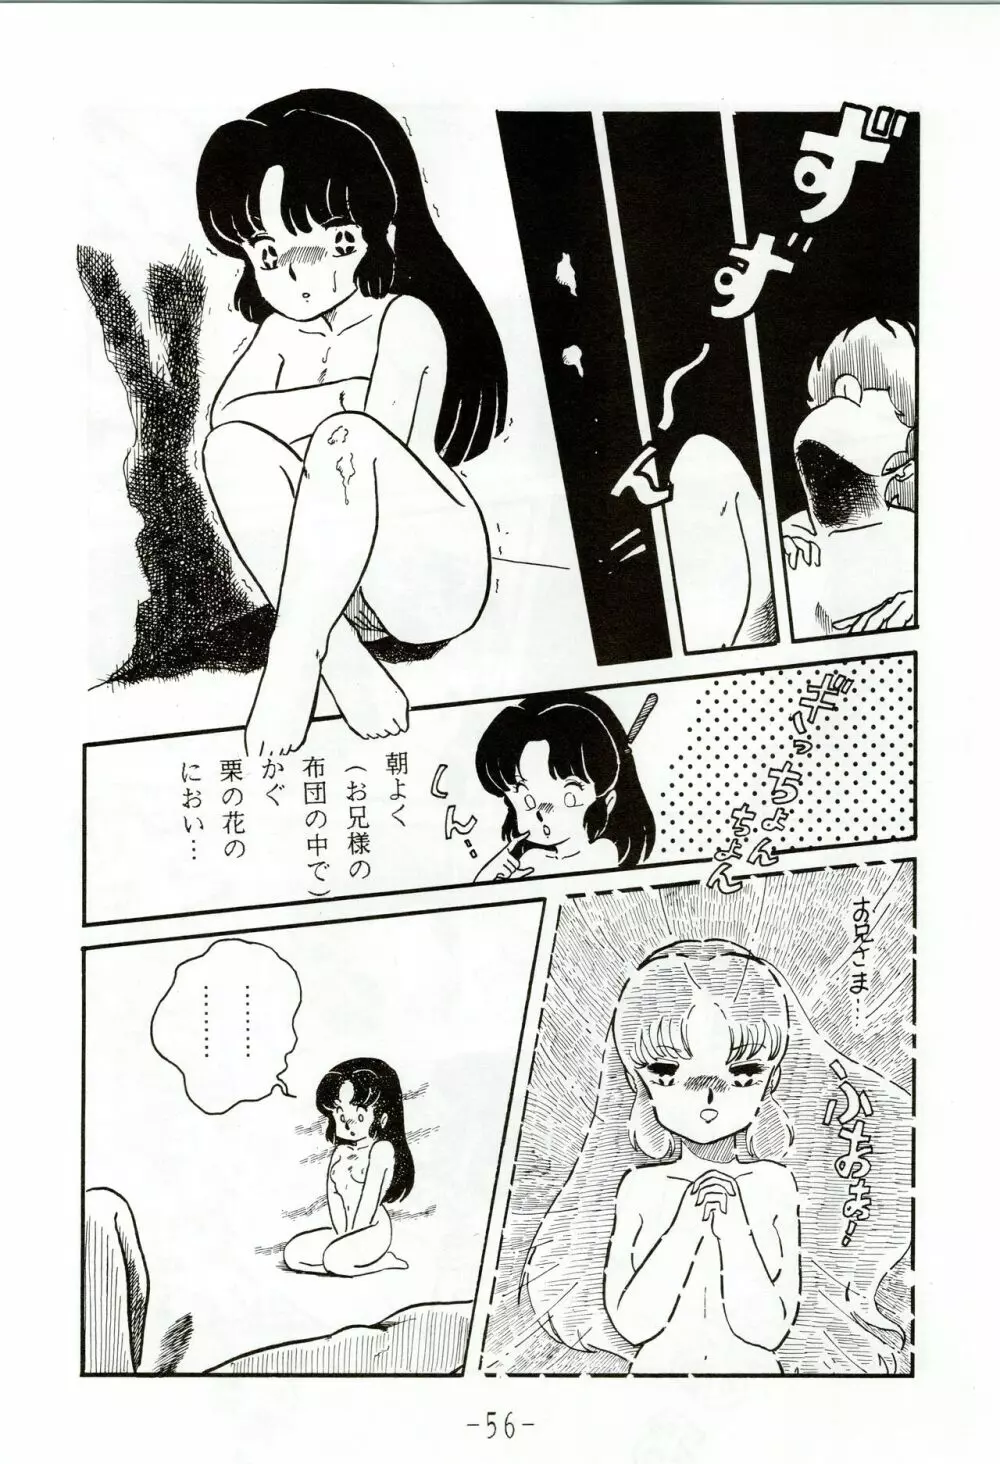 甲冑伝説 - page56